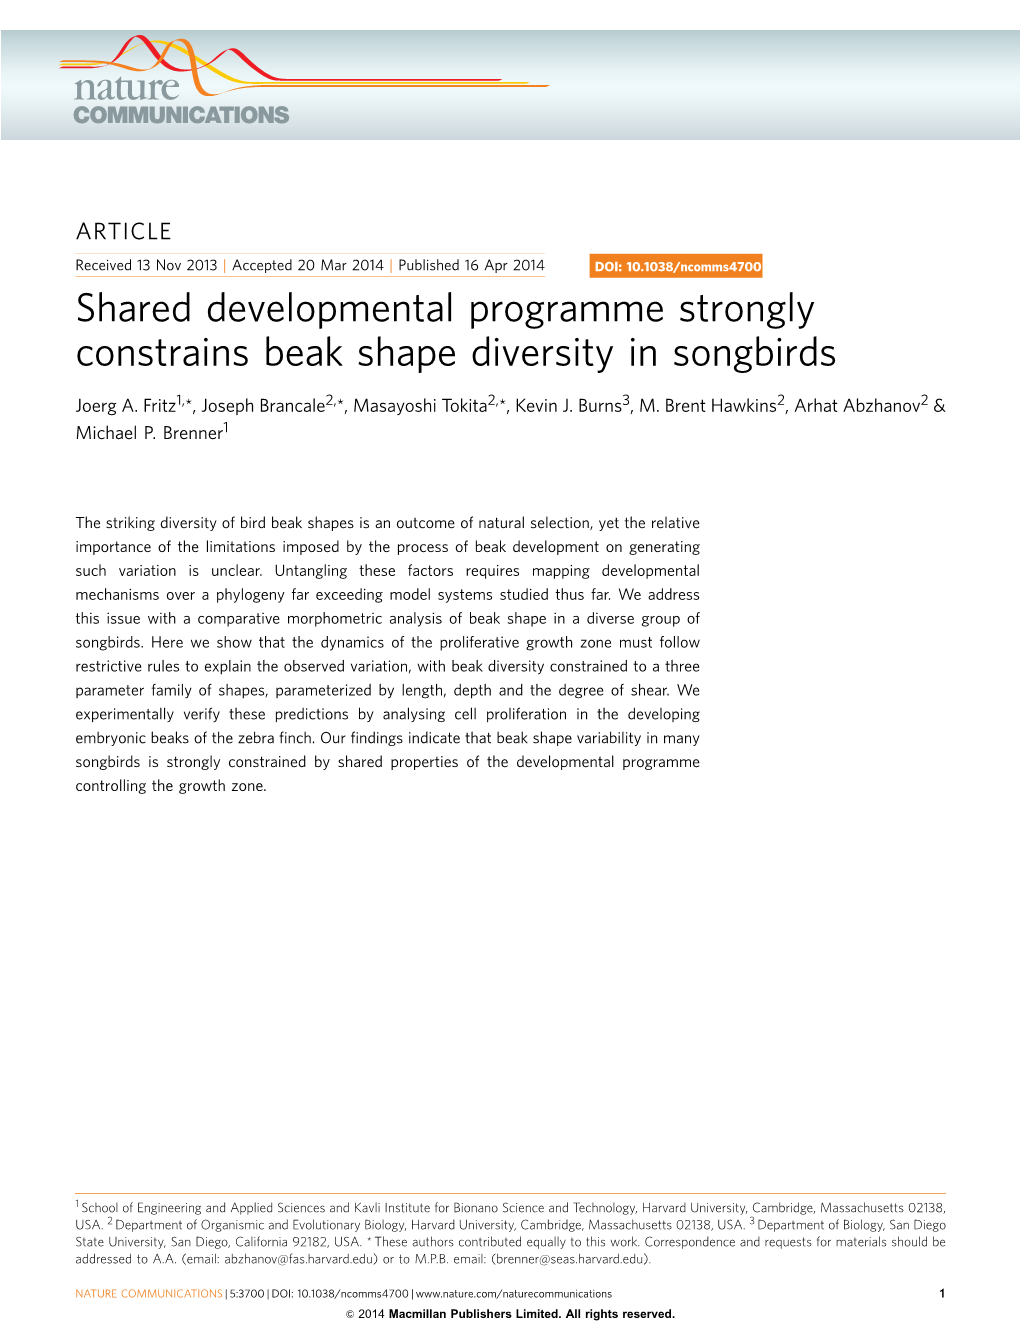 Shared Developmental Programme Strongly Constrains Beak Shape Diversity in Songbirds